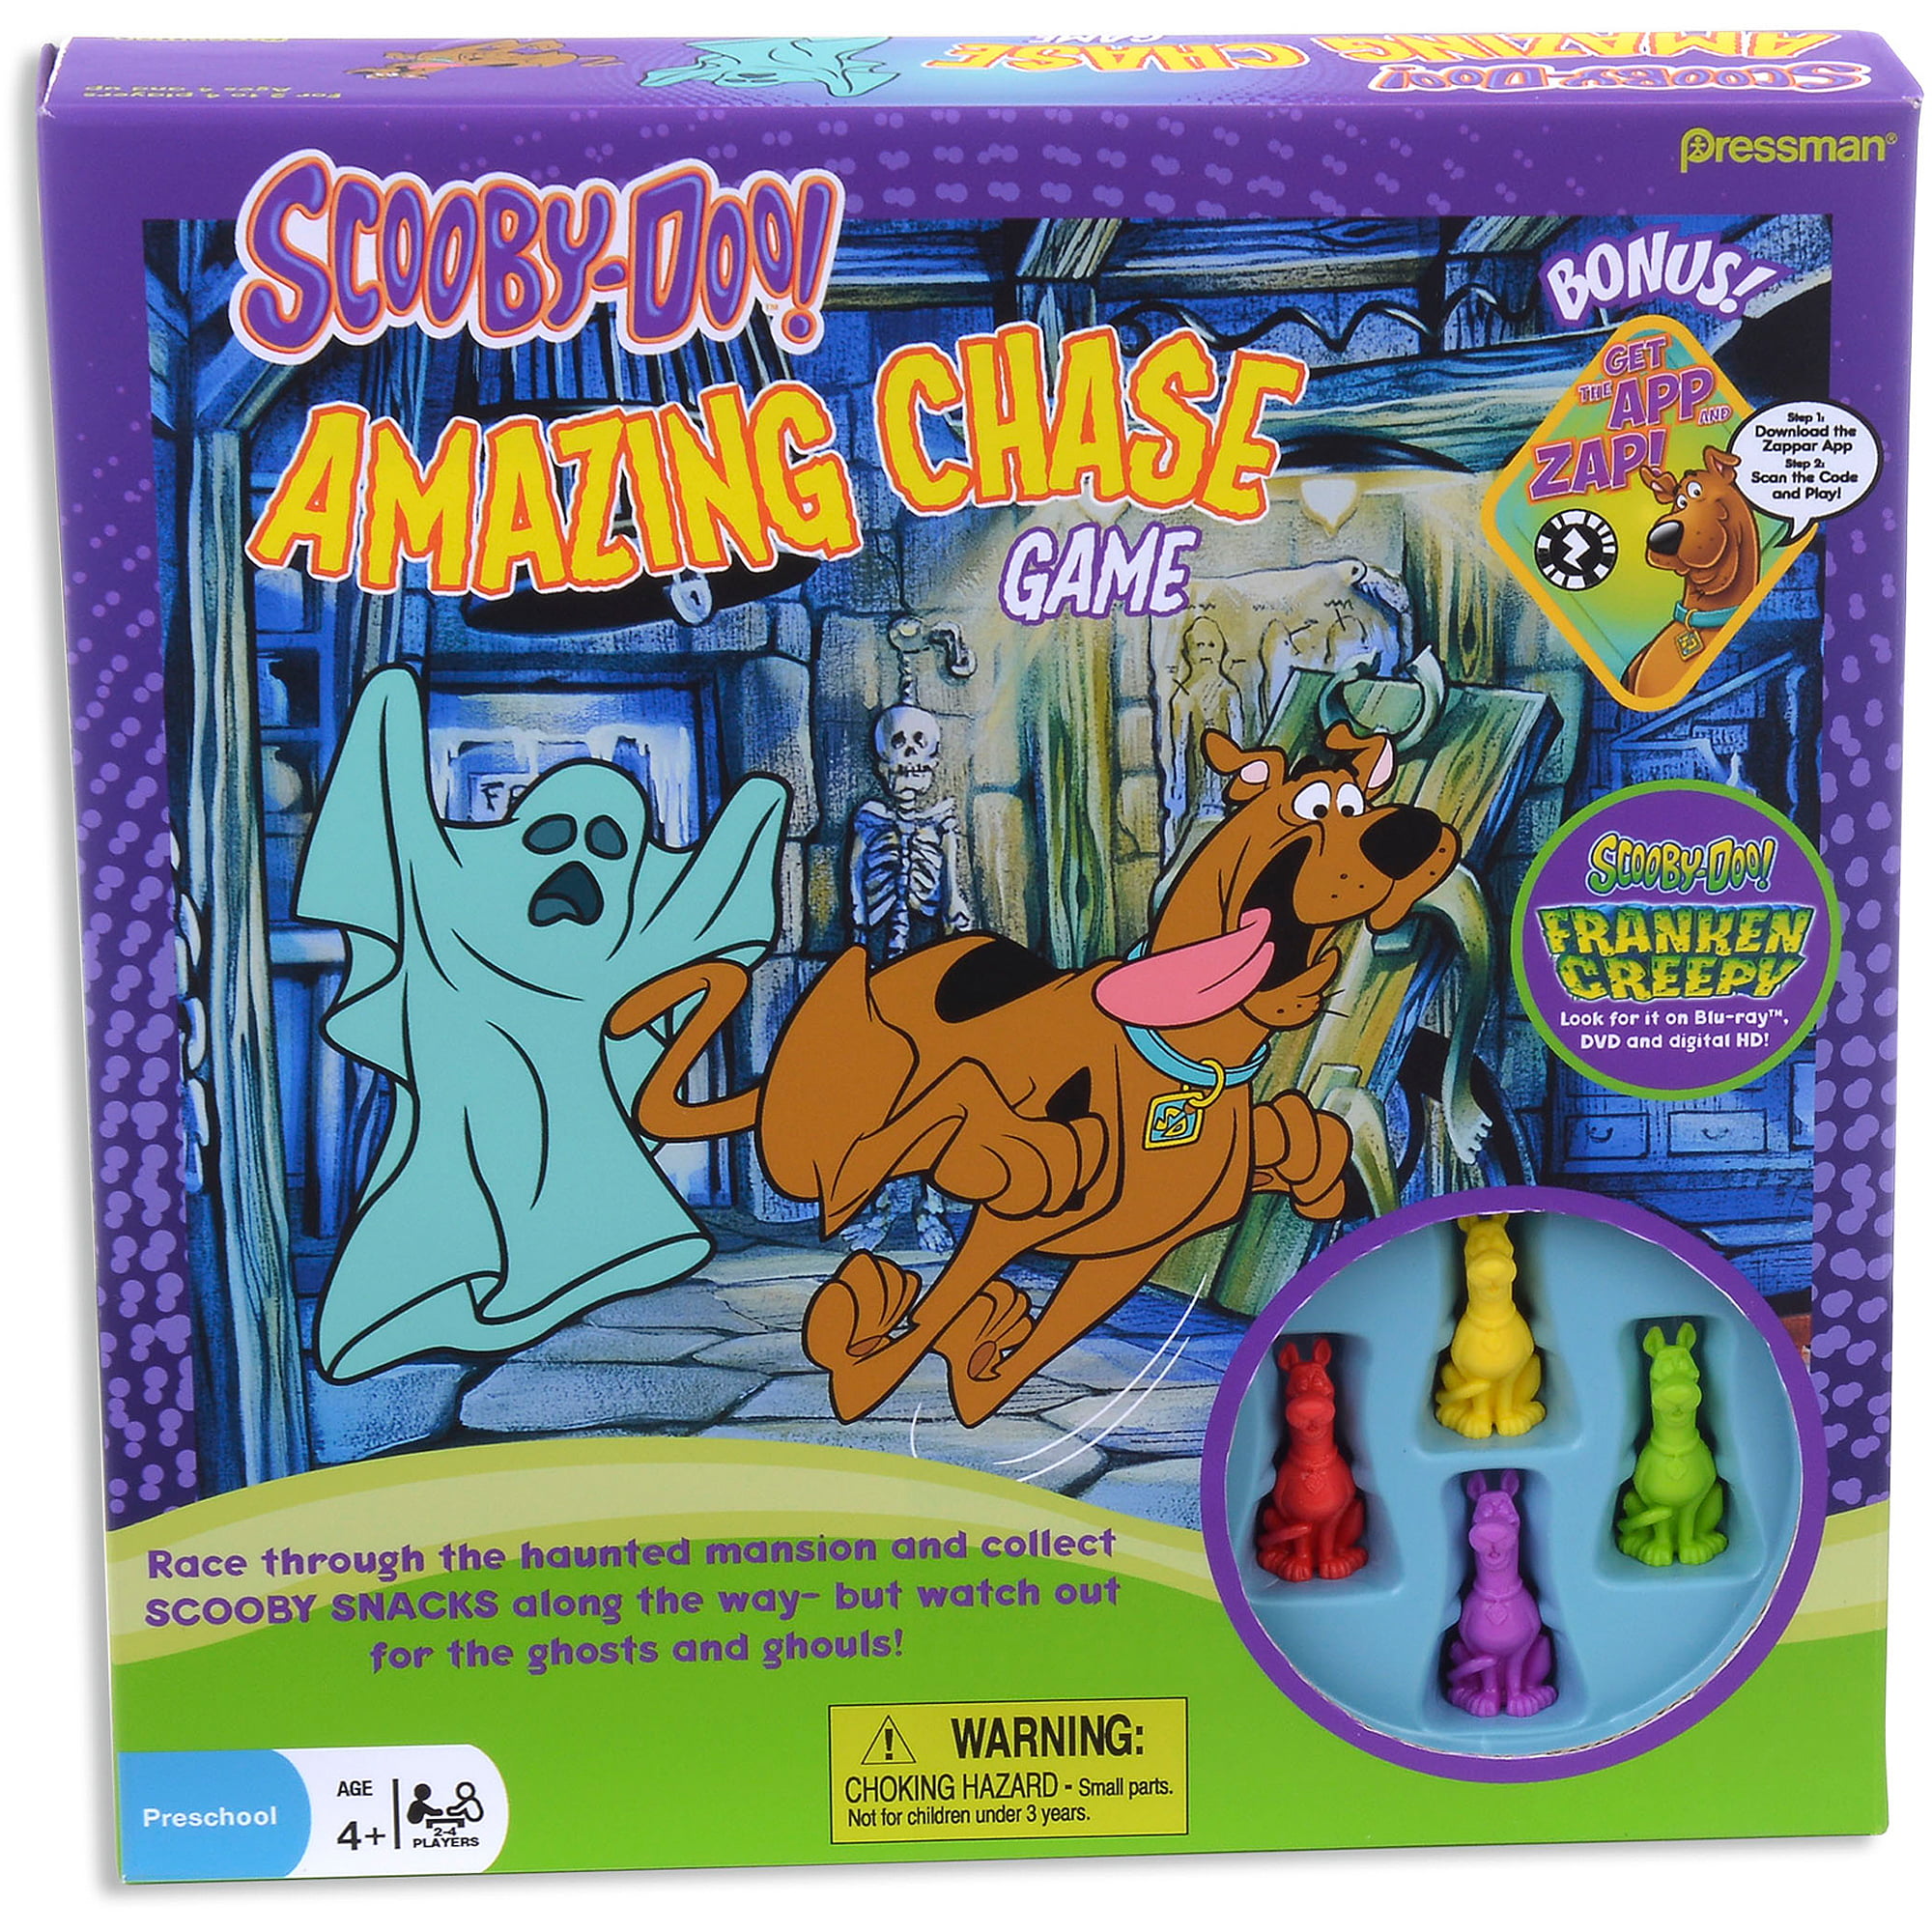 Pressman Toy Scooby-Doo Amazing Chase Game - Walmart.com